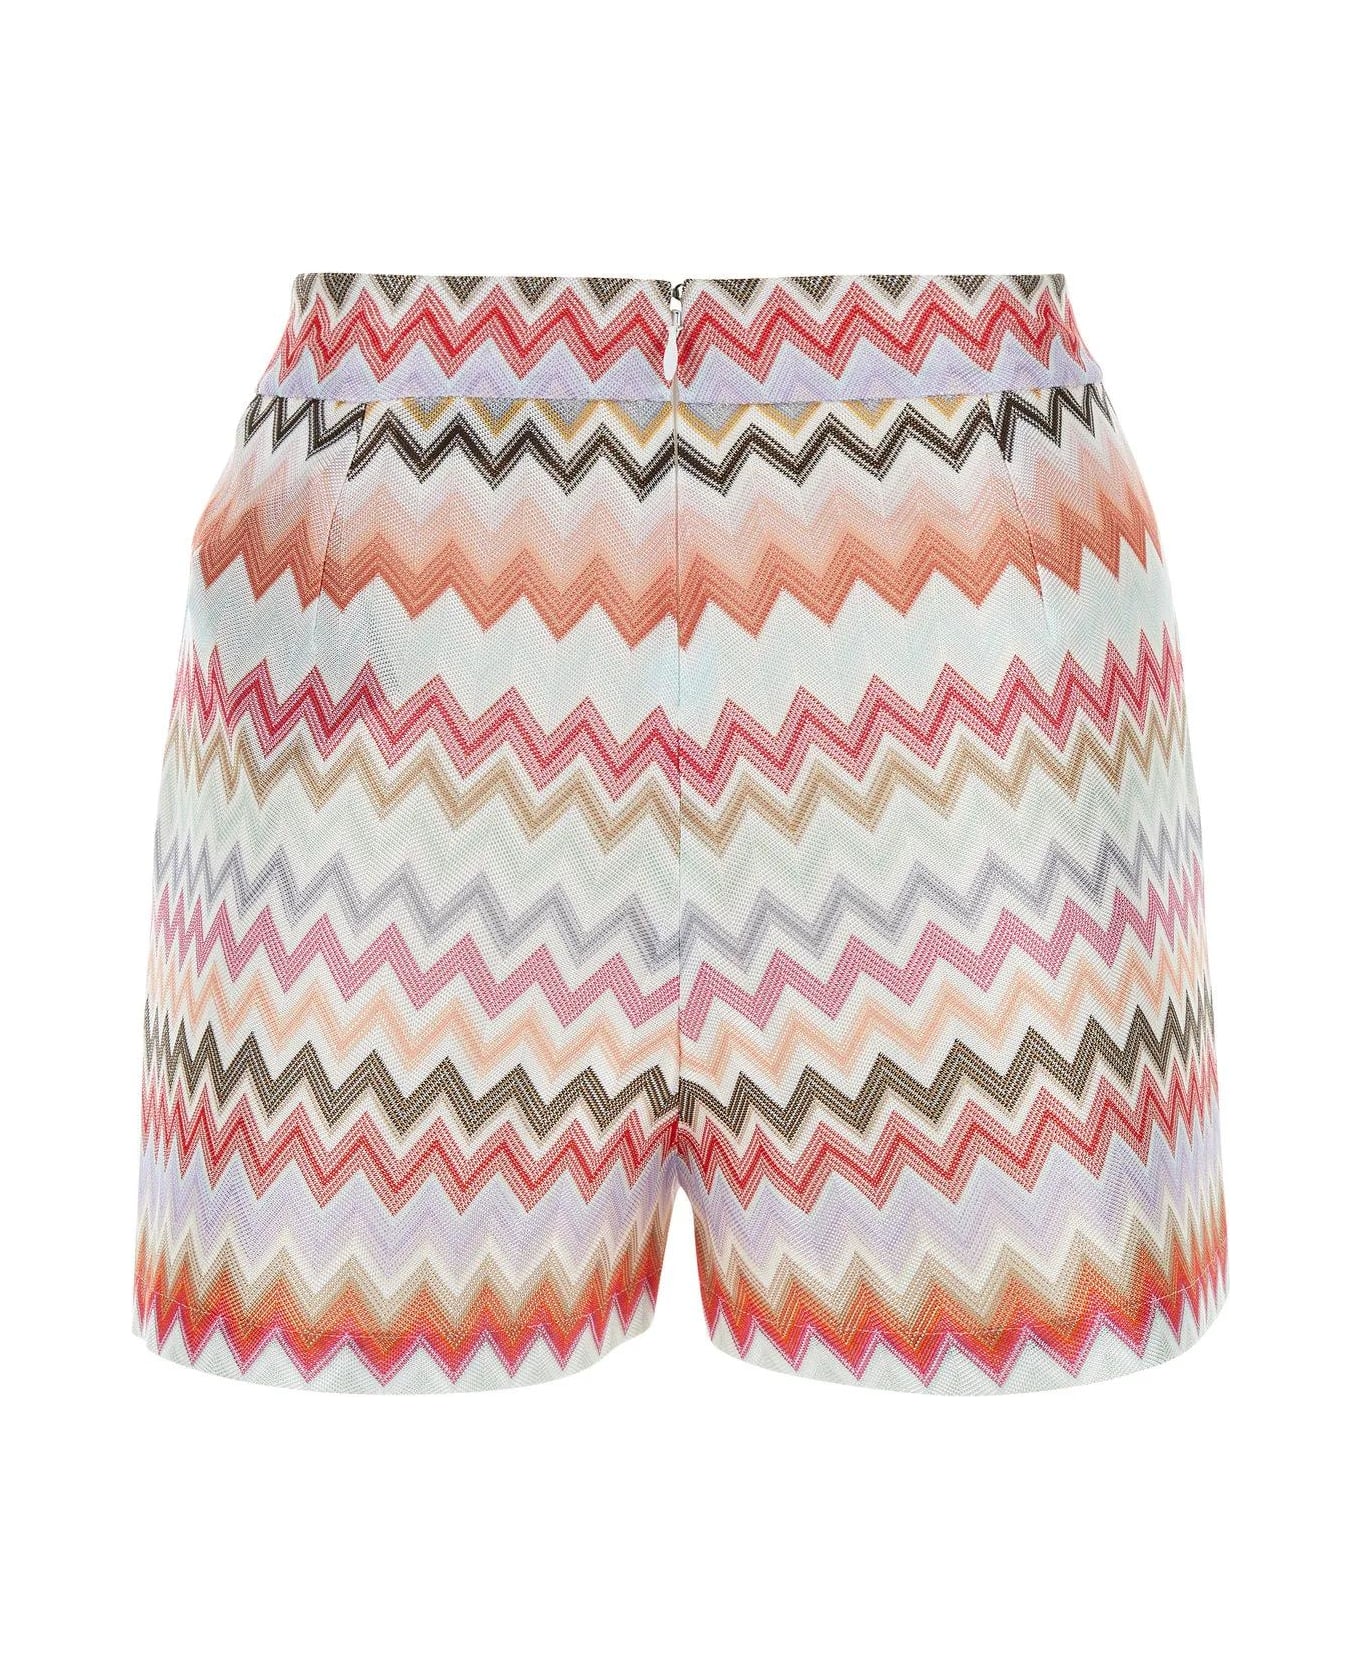 Missoni Embroidered Cotton Blend Shorts - Light Tones Multicol